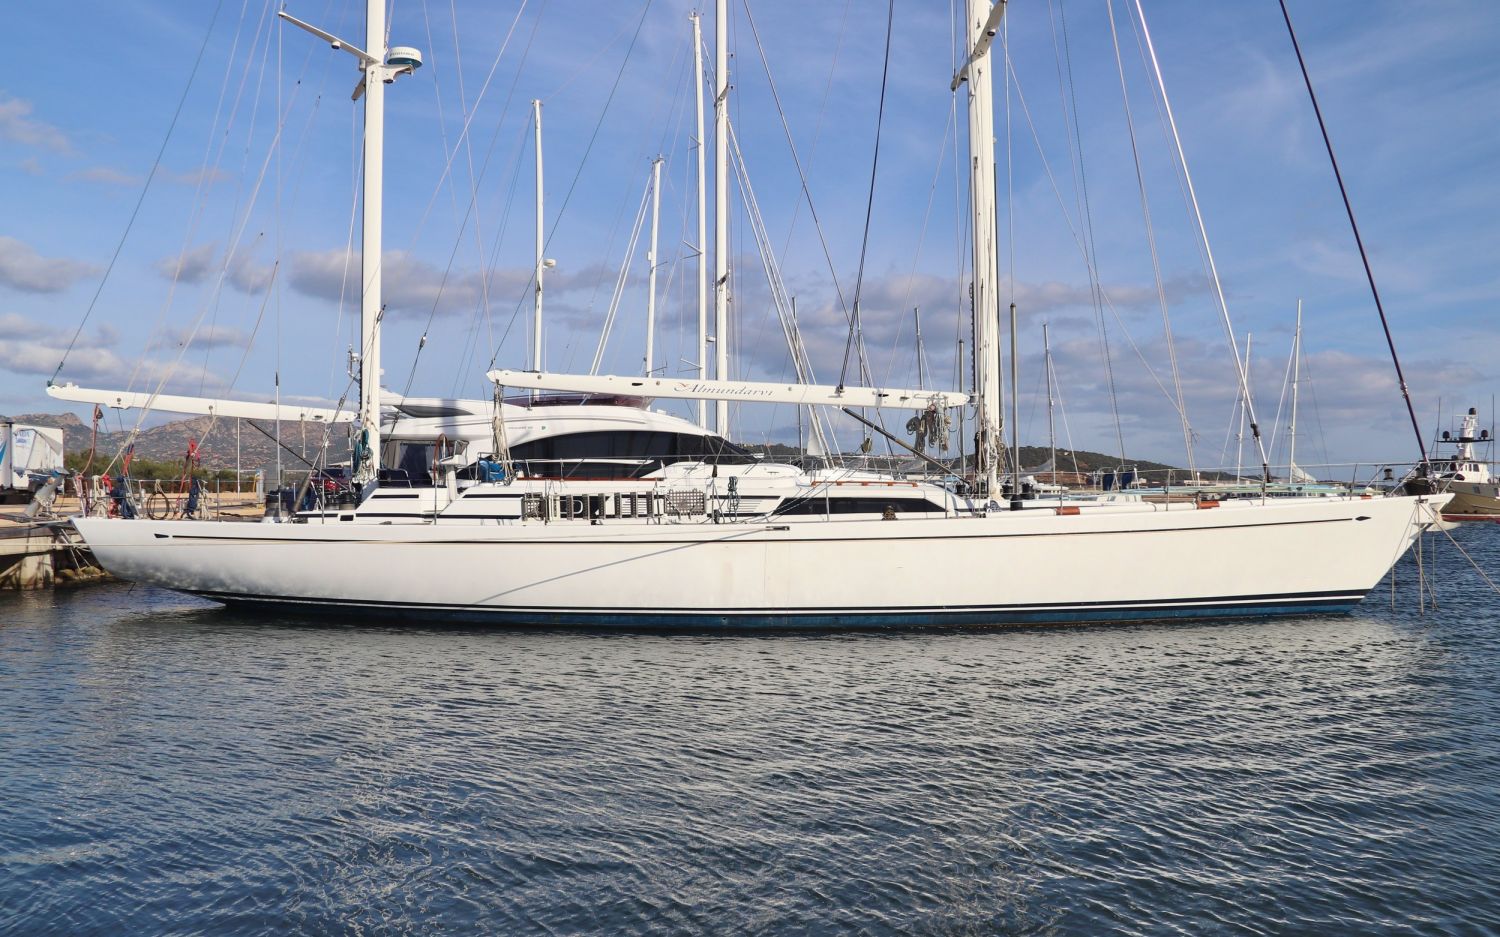 GERMAN FRERS 82, Superyacht Segel for sale by HollandBoat International Yachtbrokers